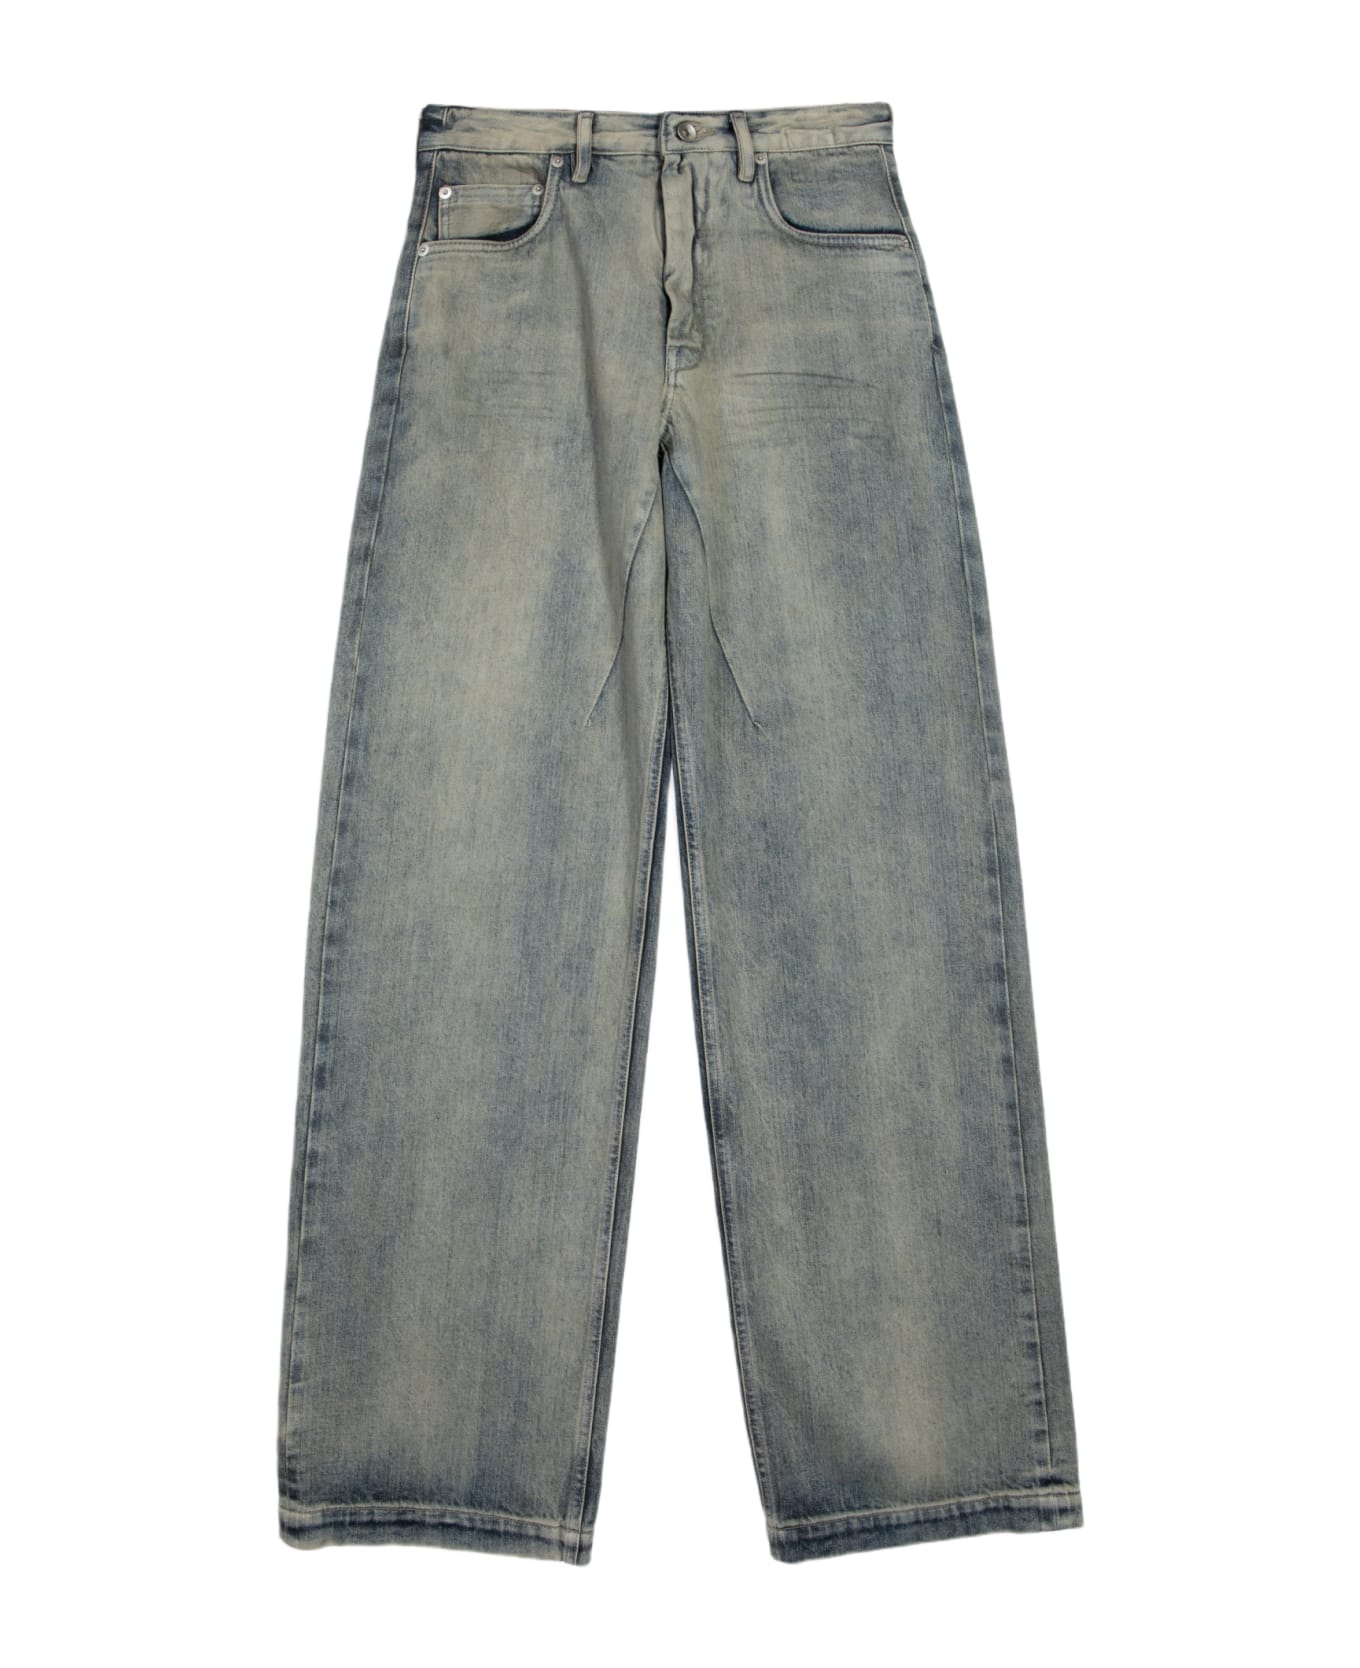 DRKSHDW Geth Jeans Sandblasted mid blue denim baggy pant - Geth Jeans - Denim